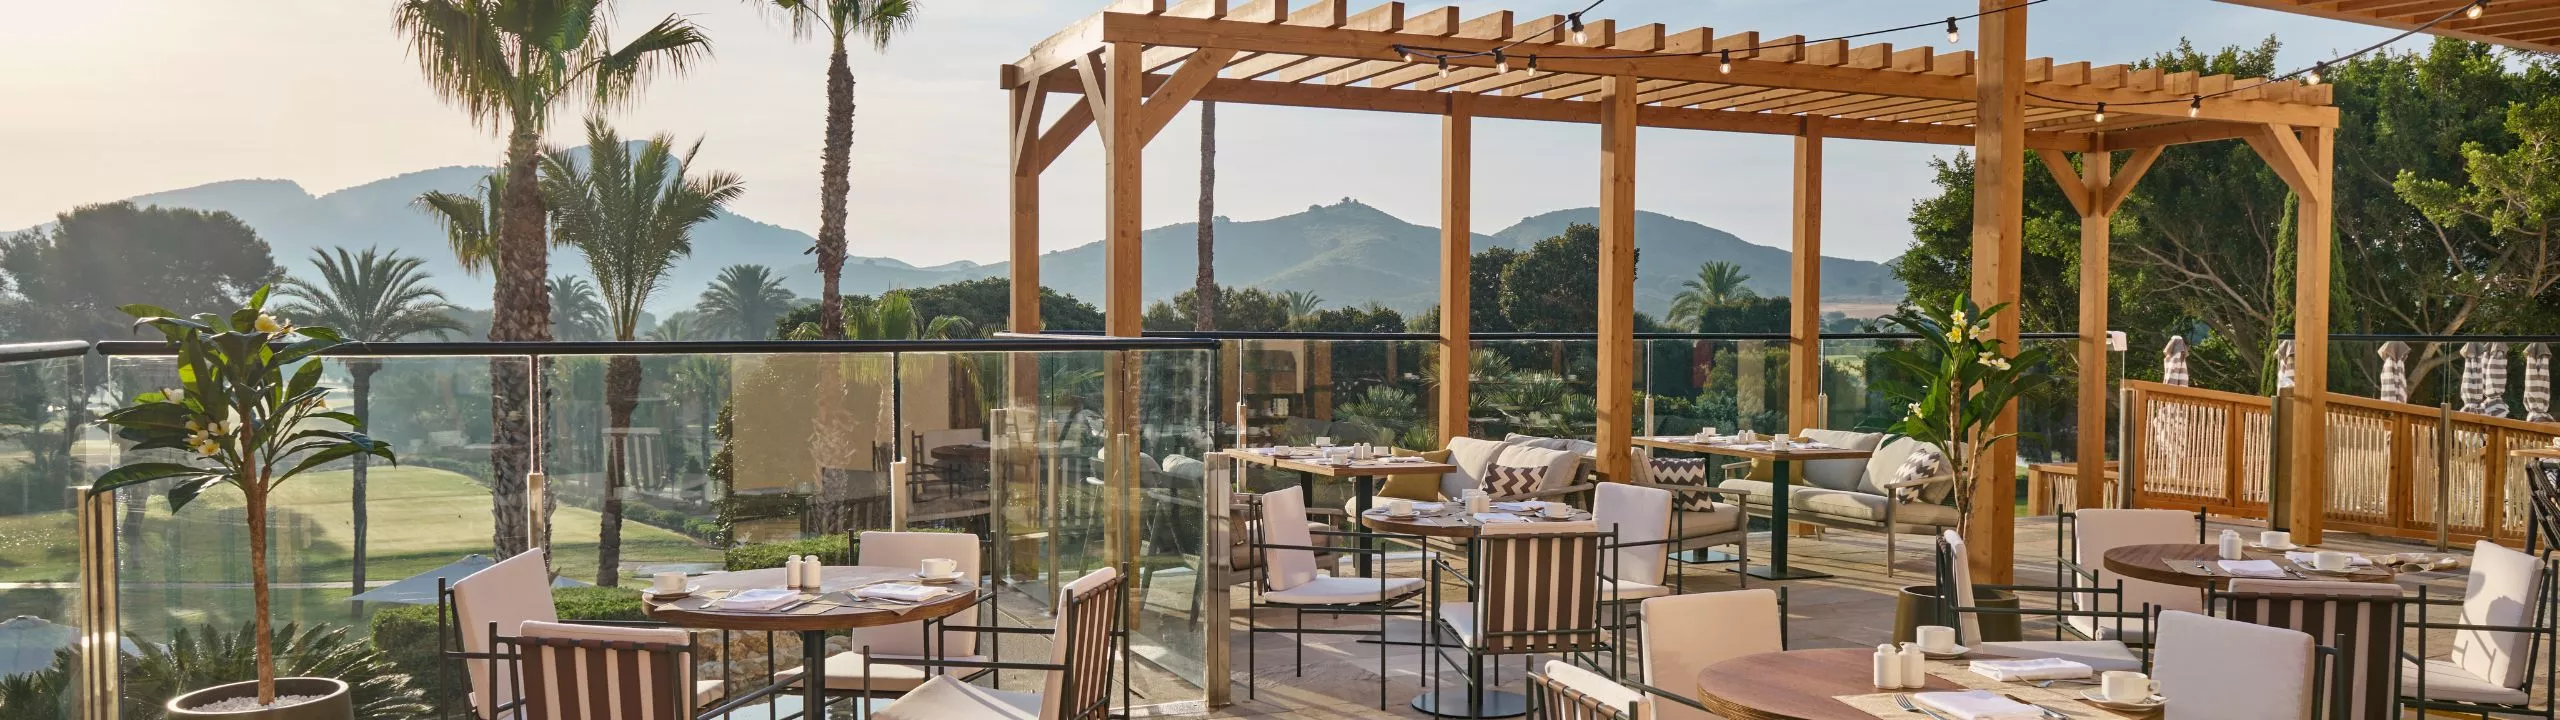 Grand terrace Grill - Grand Hyatt La Manga Club GOlf & Spa - views vistas